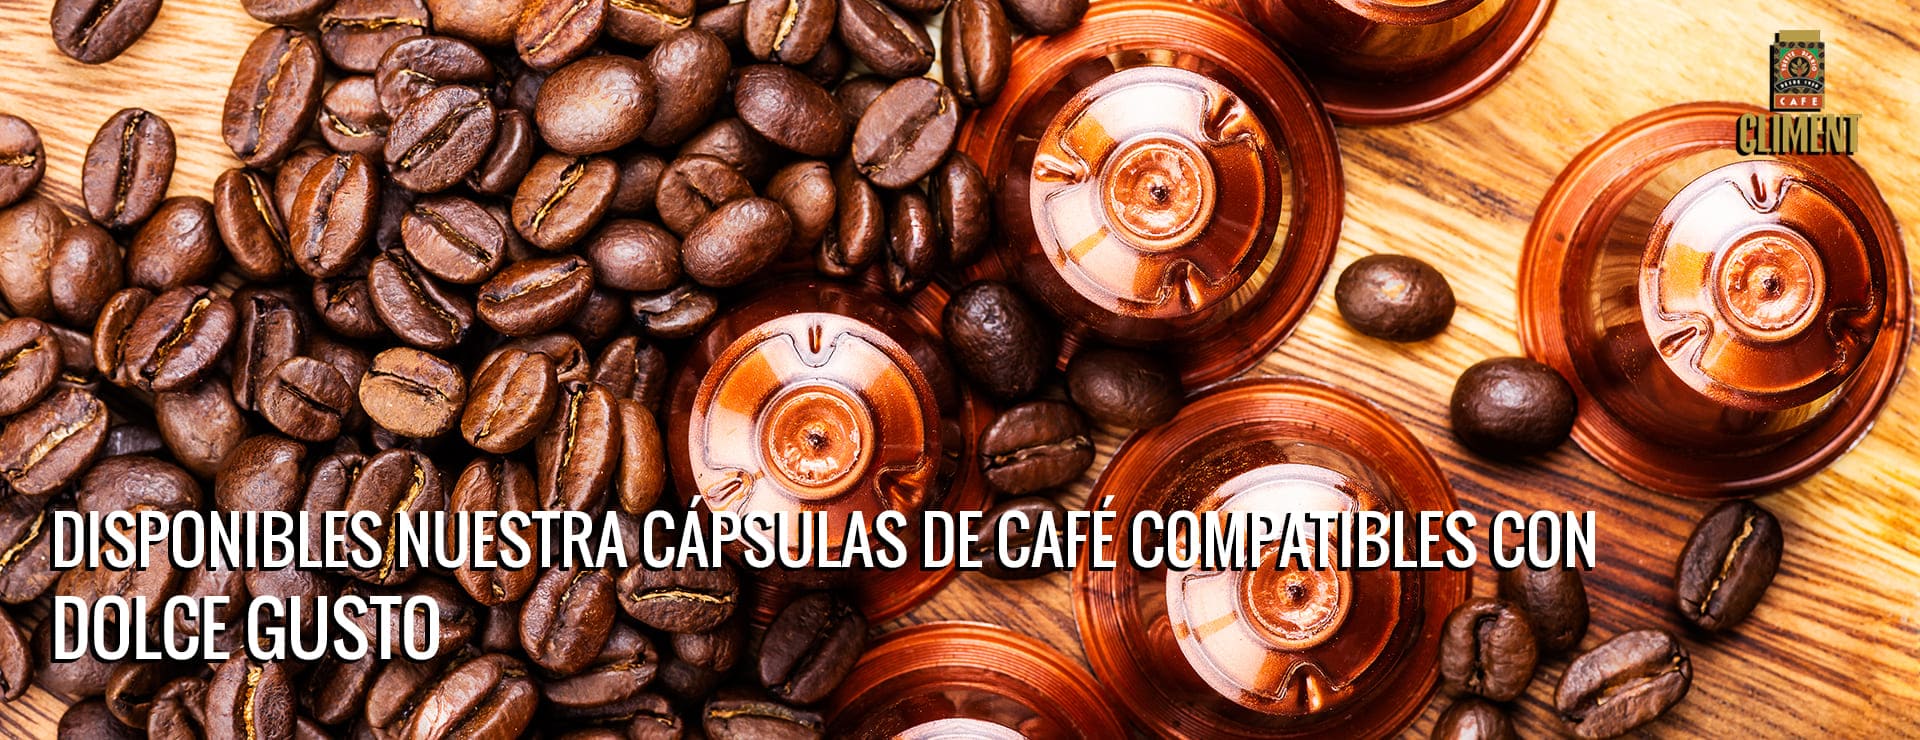 Capsulas Café Recargables - Tés a granel - Envios gratuitos